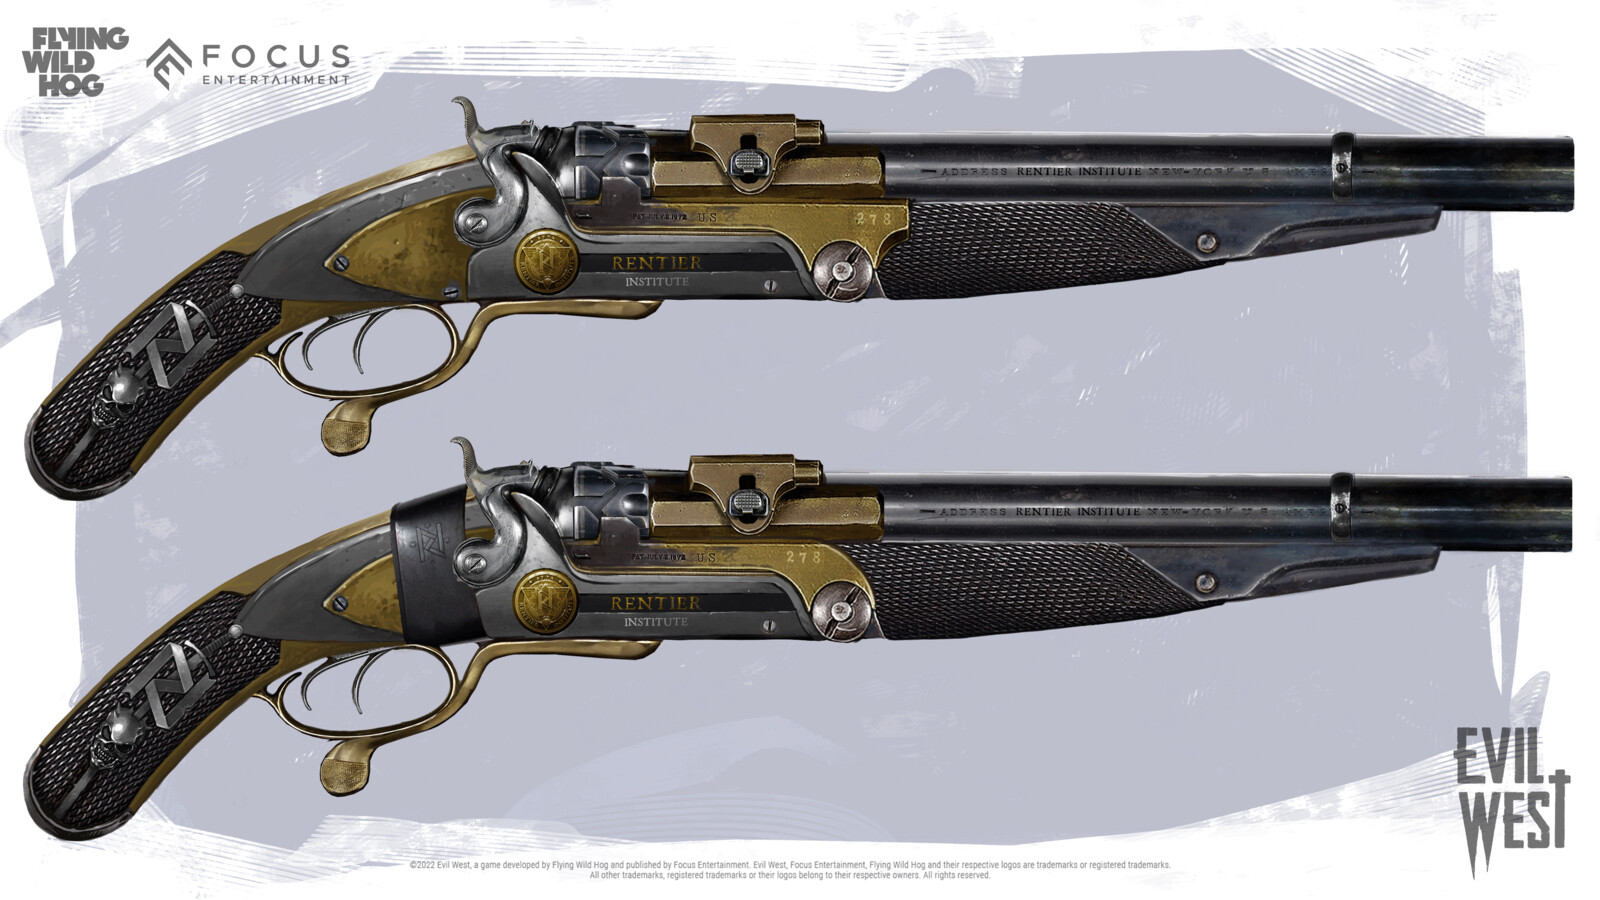 Concept for Shotgun in Rentier Institute edition